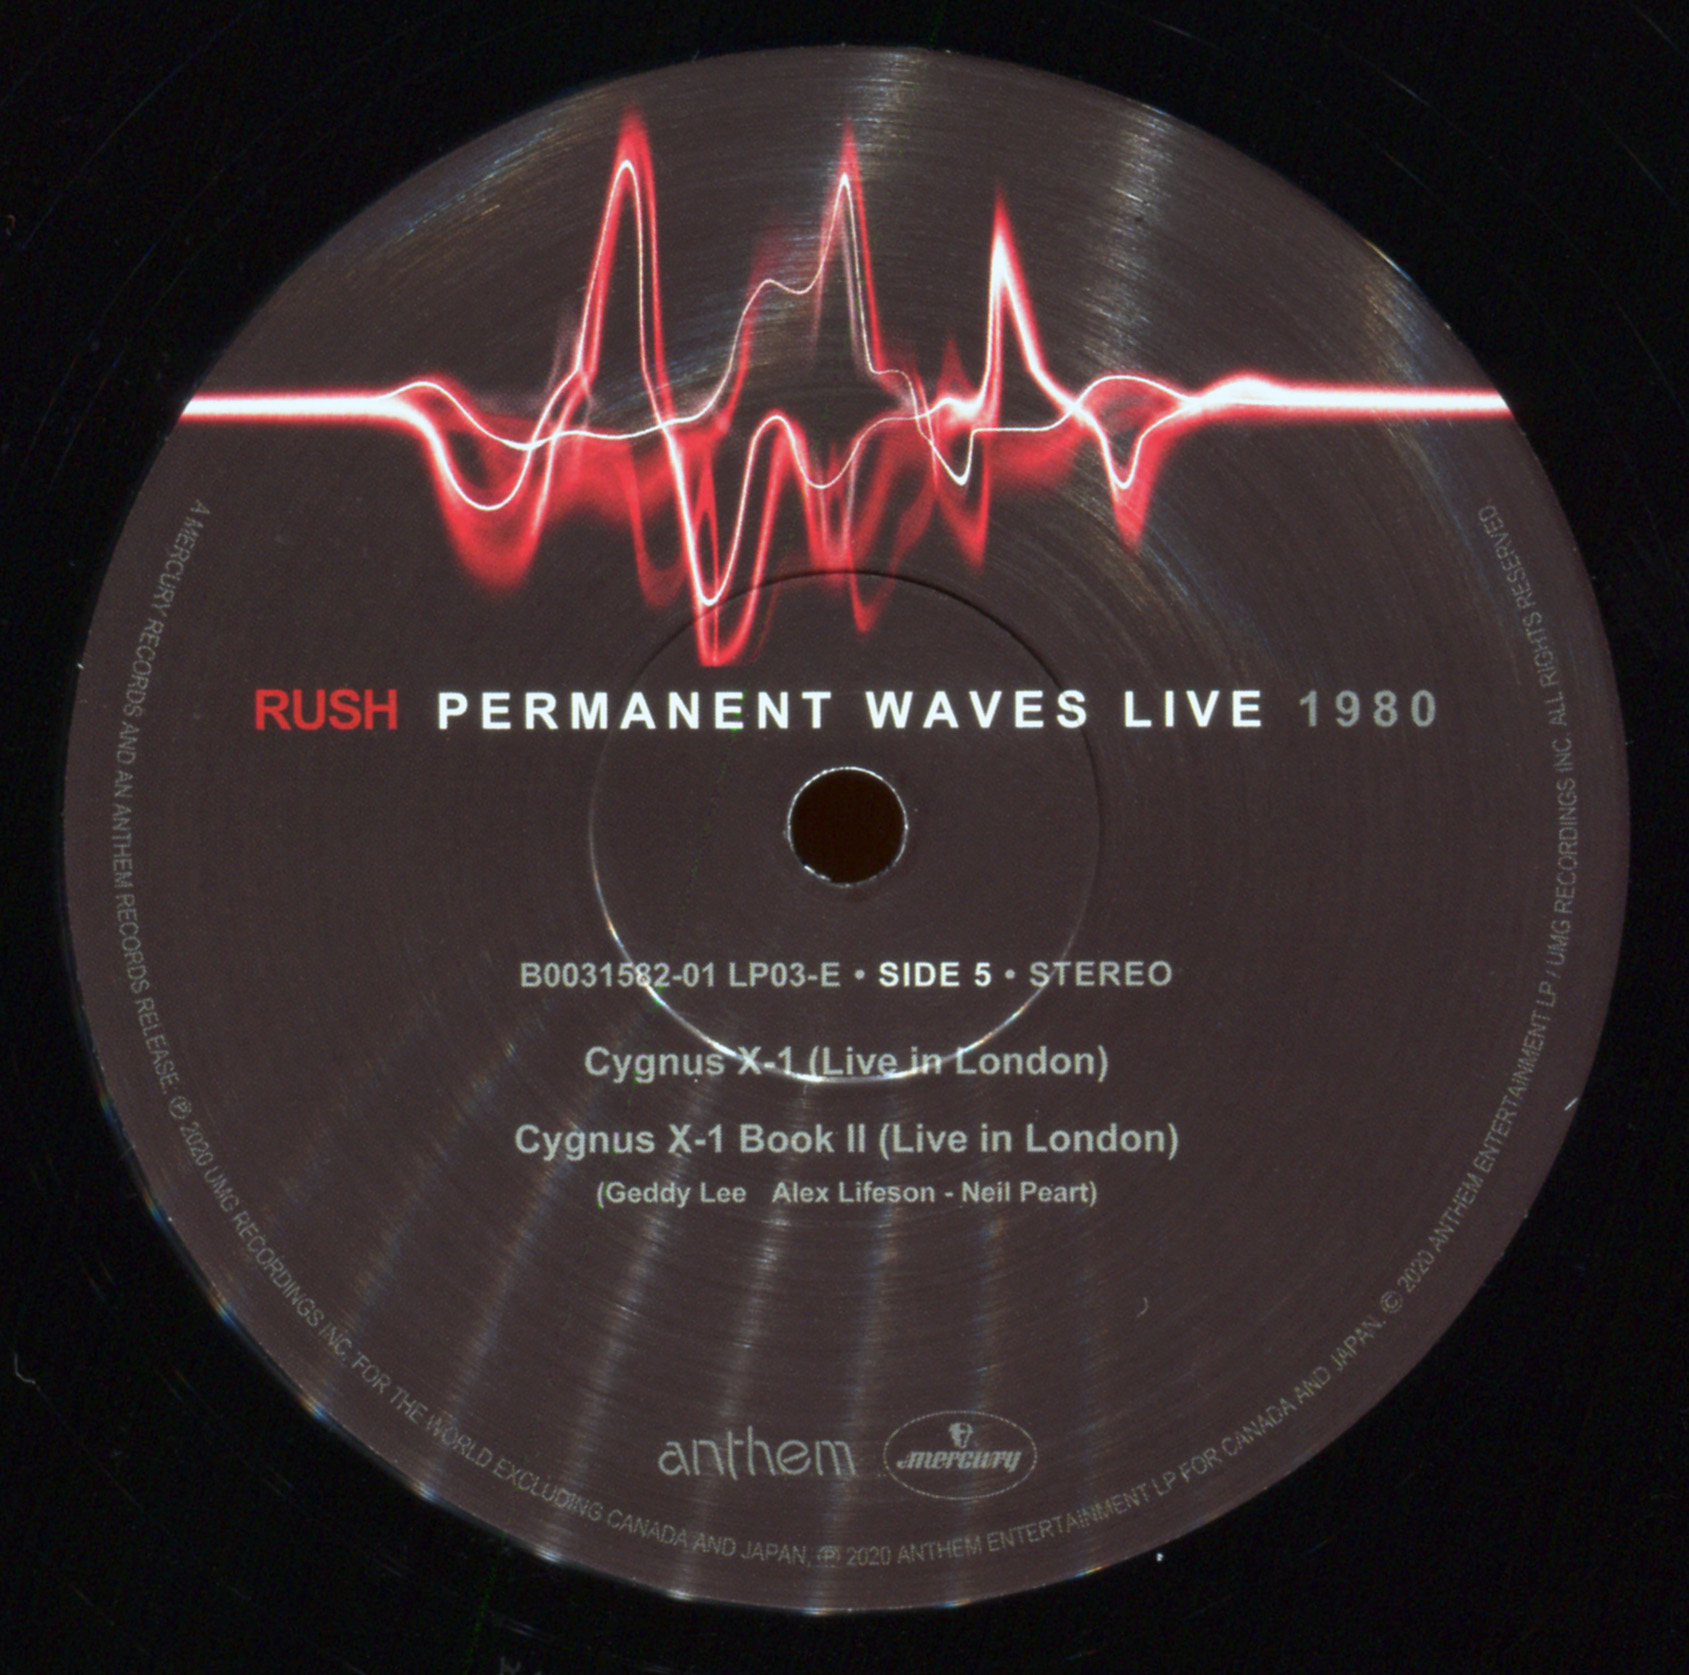 Vinilo Rush - Permanent Waves Original: Compra Online en Oferta